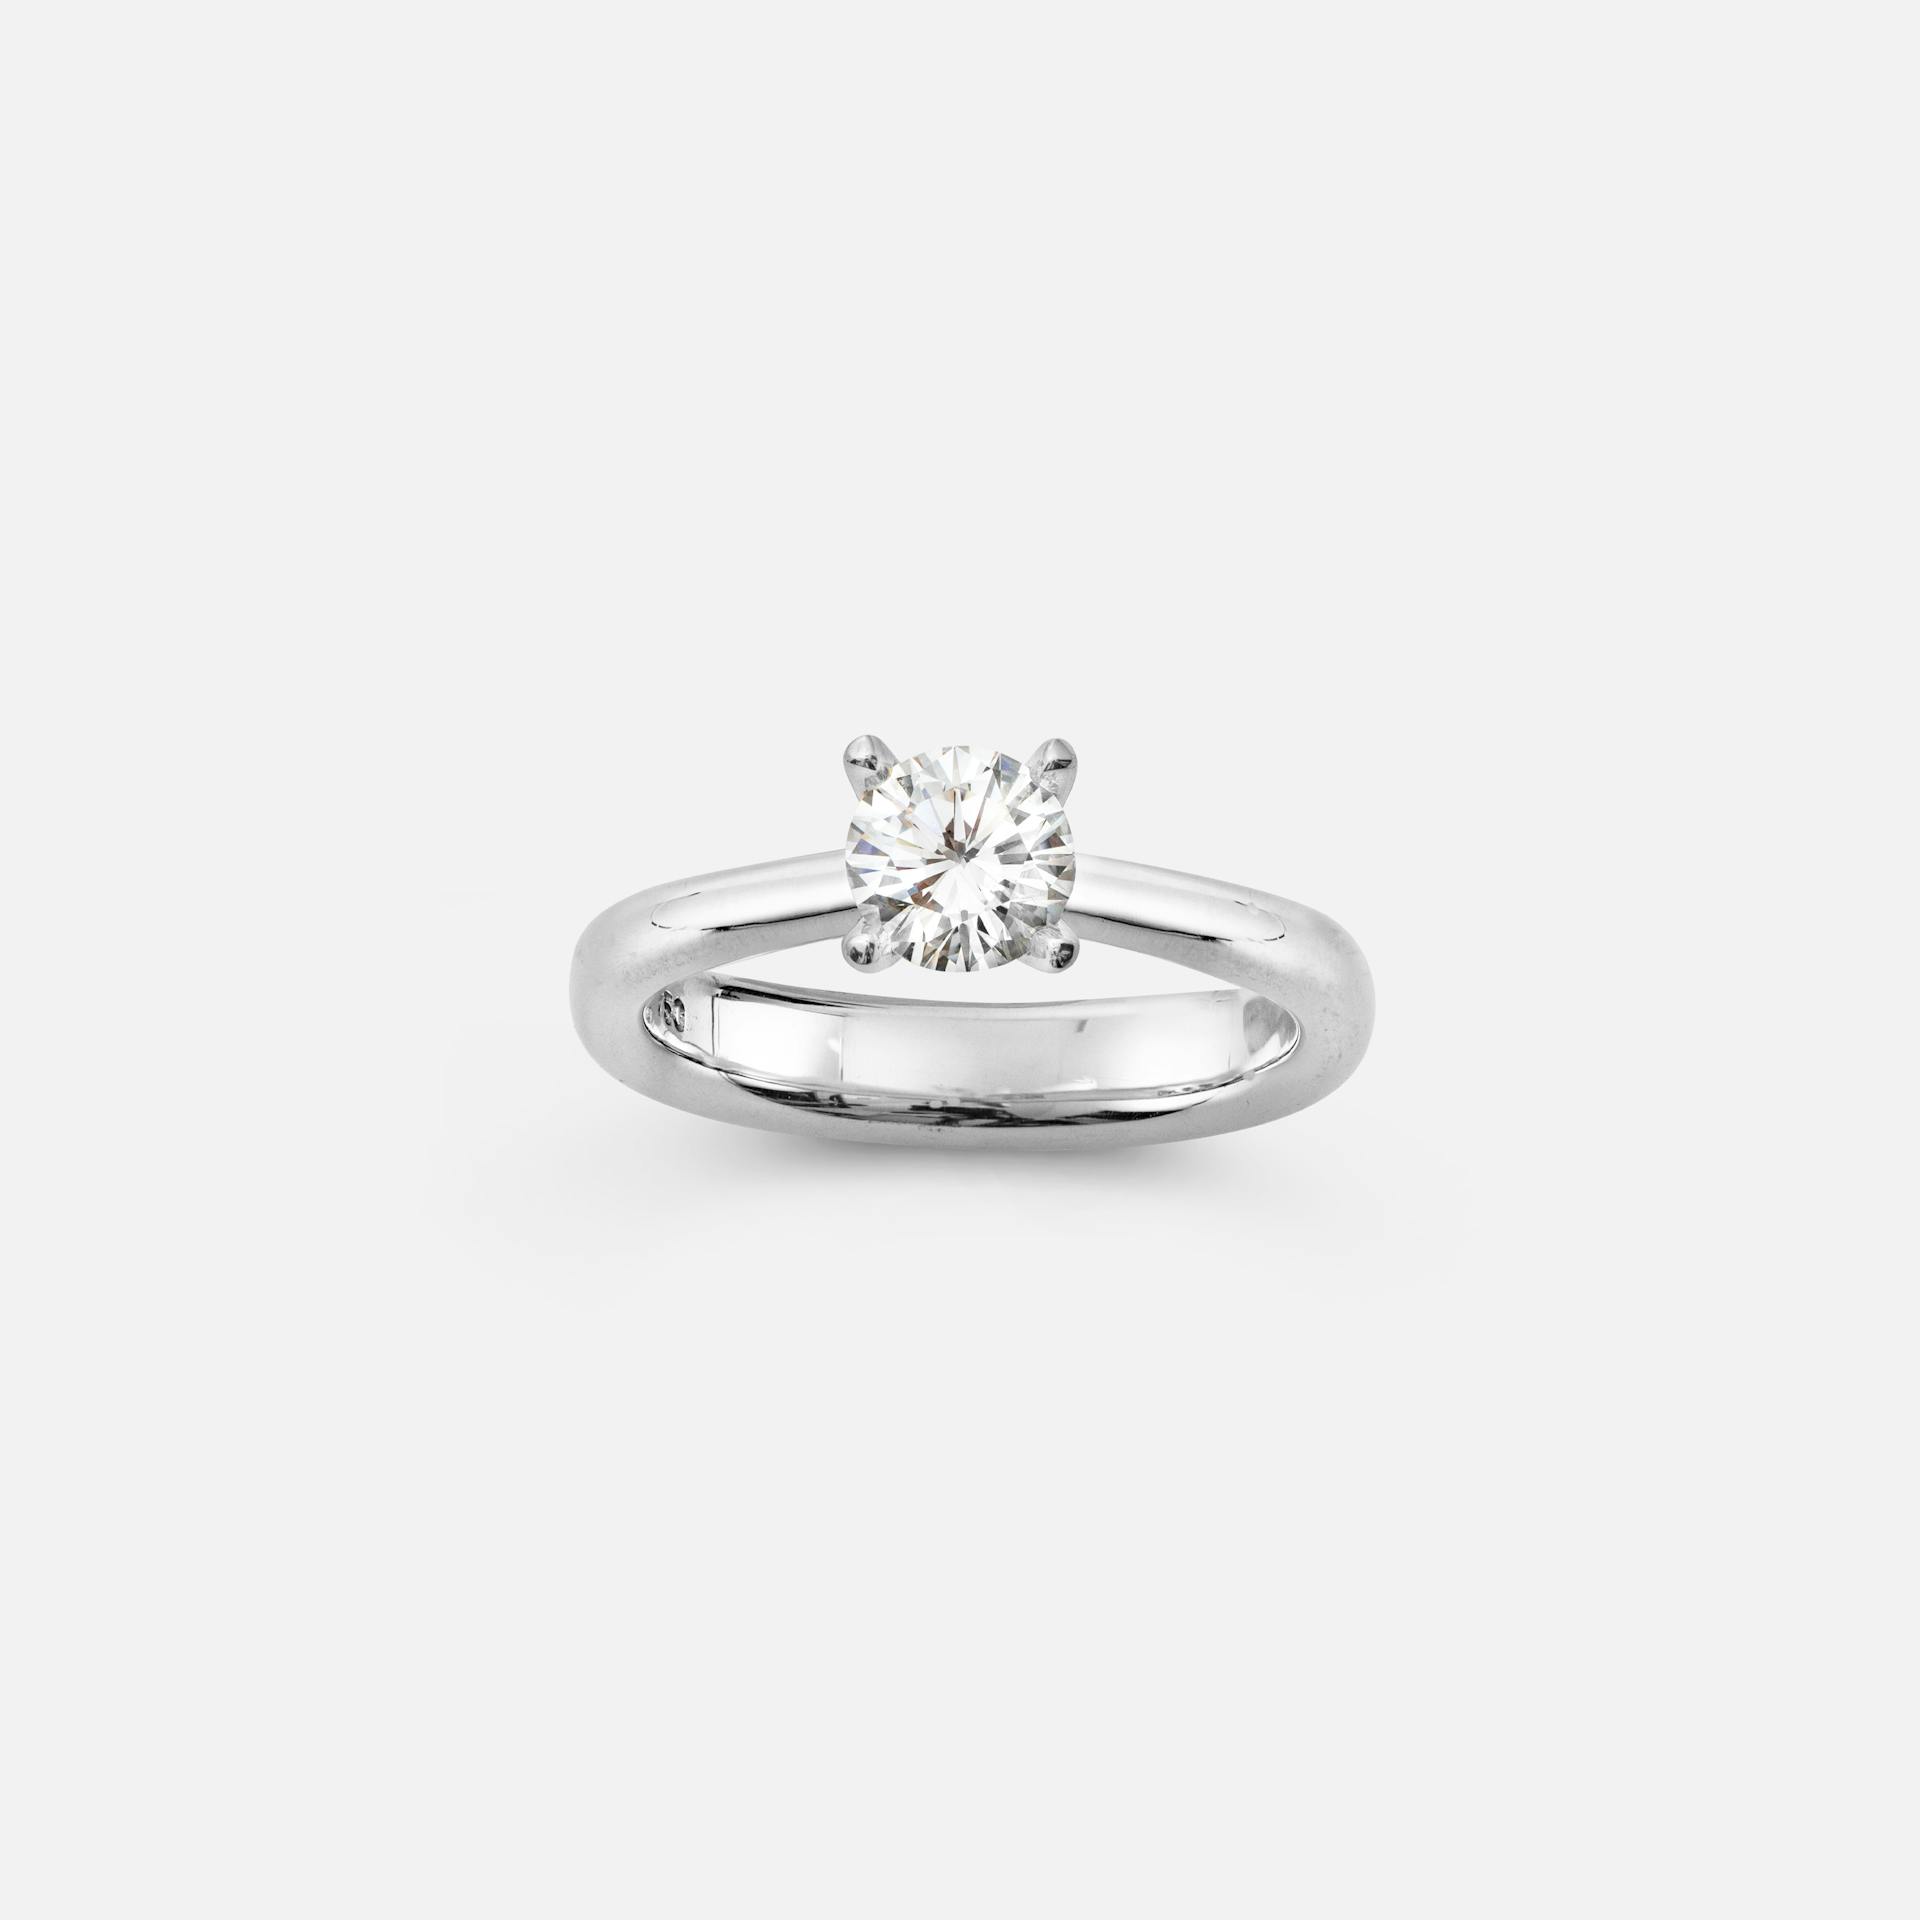 Winter Frost solitaire ring Dummy item for web - ring heavy solitaire WG 18k hvidguld besat med en brillantslebet diamant fra 1,00 ct. TW.VS
